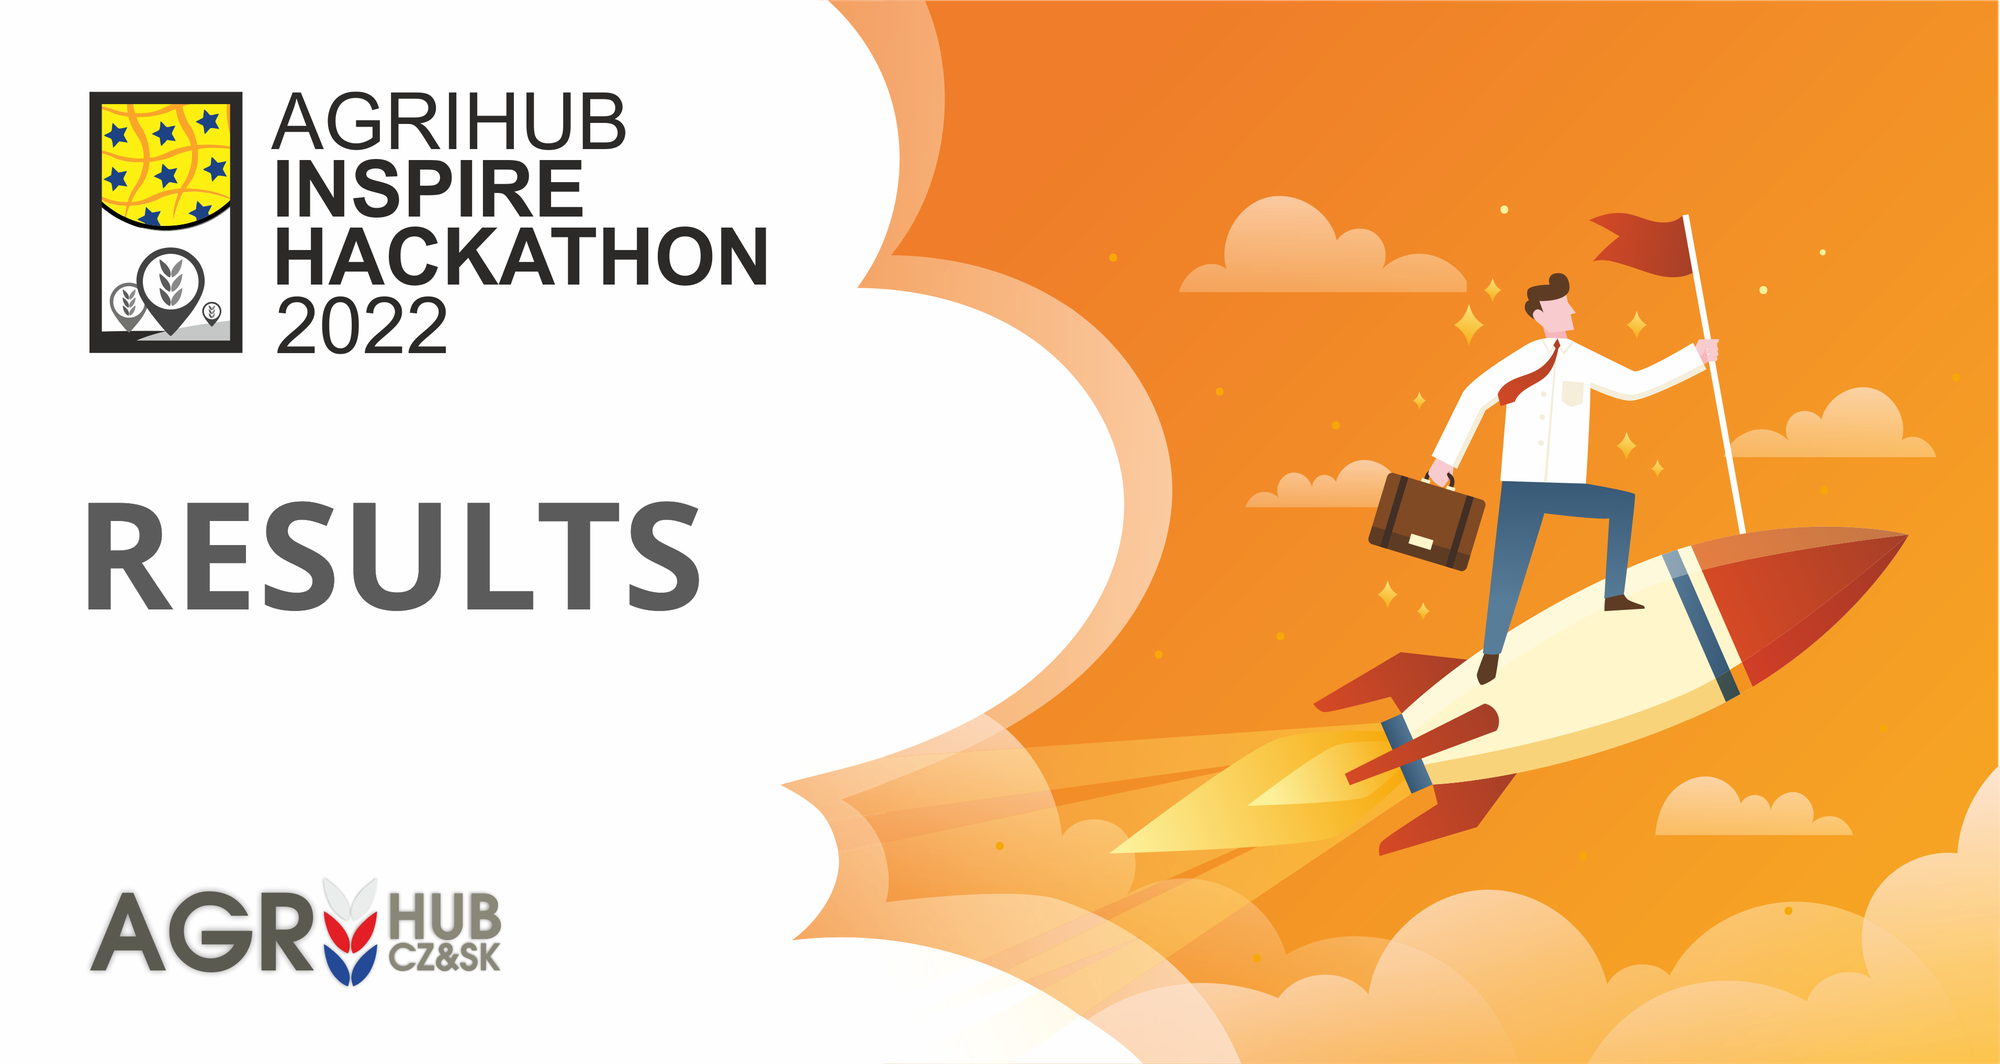 HUB4EVERYBODY won the Agrihub INSPIRE Hackathon 2022